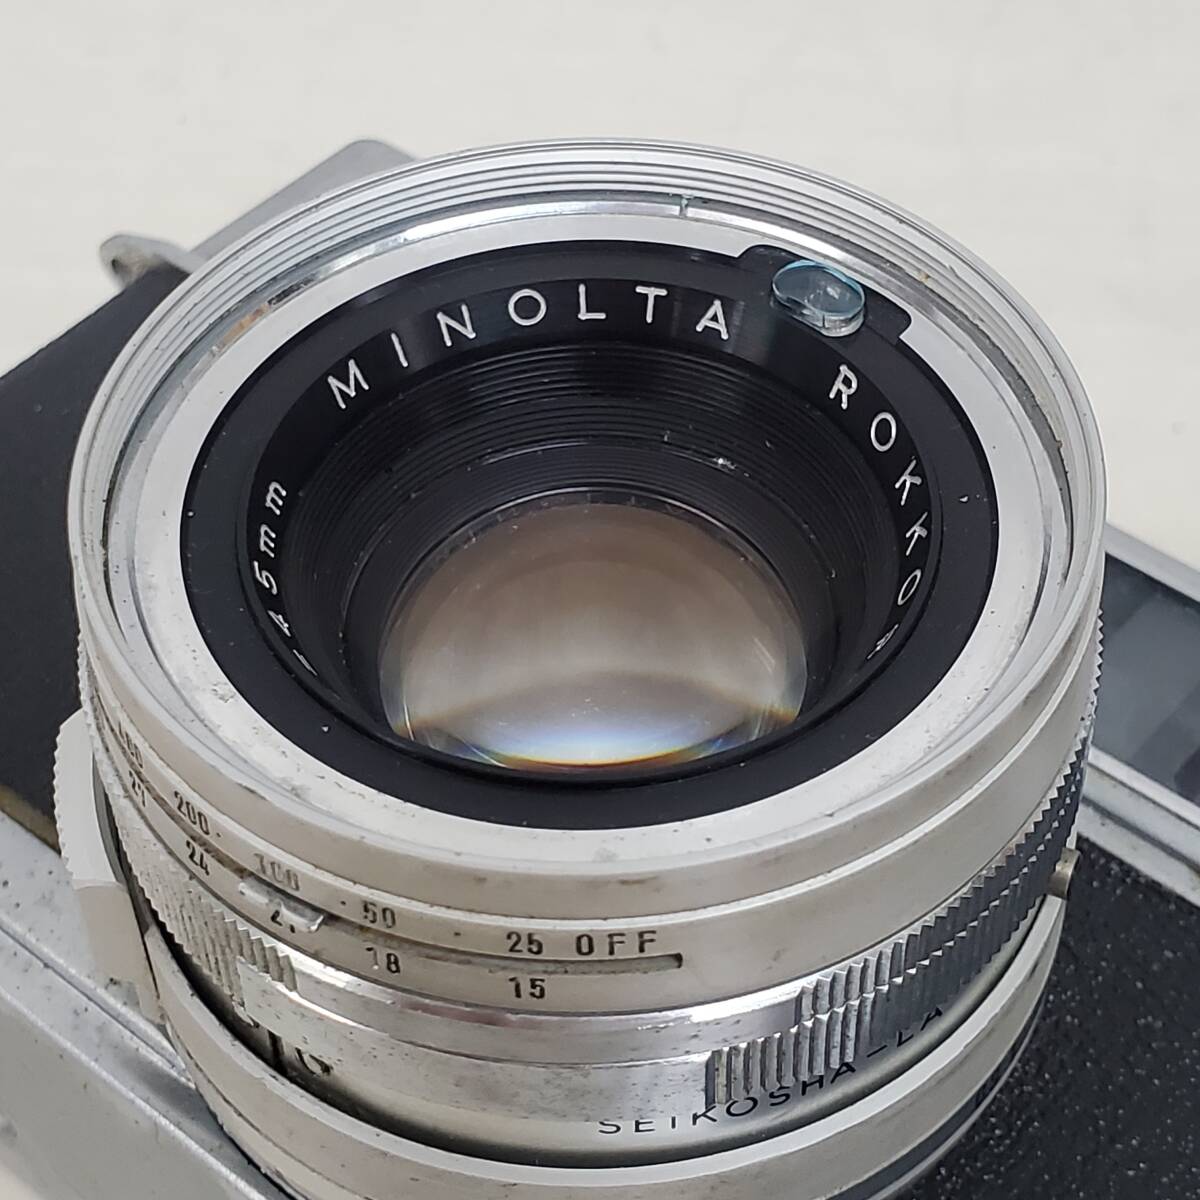 0228-207* Minolta MINOLTA high matic HI-MATIC 7 film camera range finder ROKKOR-PF 1:1.8 f=45. operation not yet verification Junk 